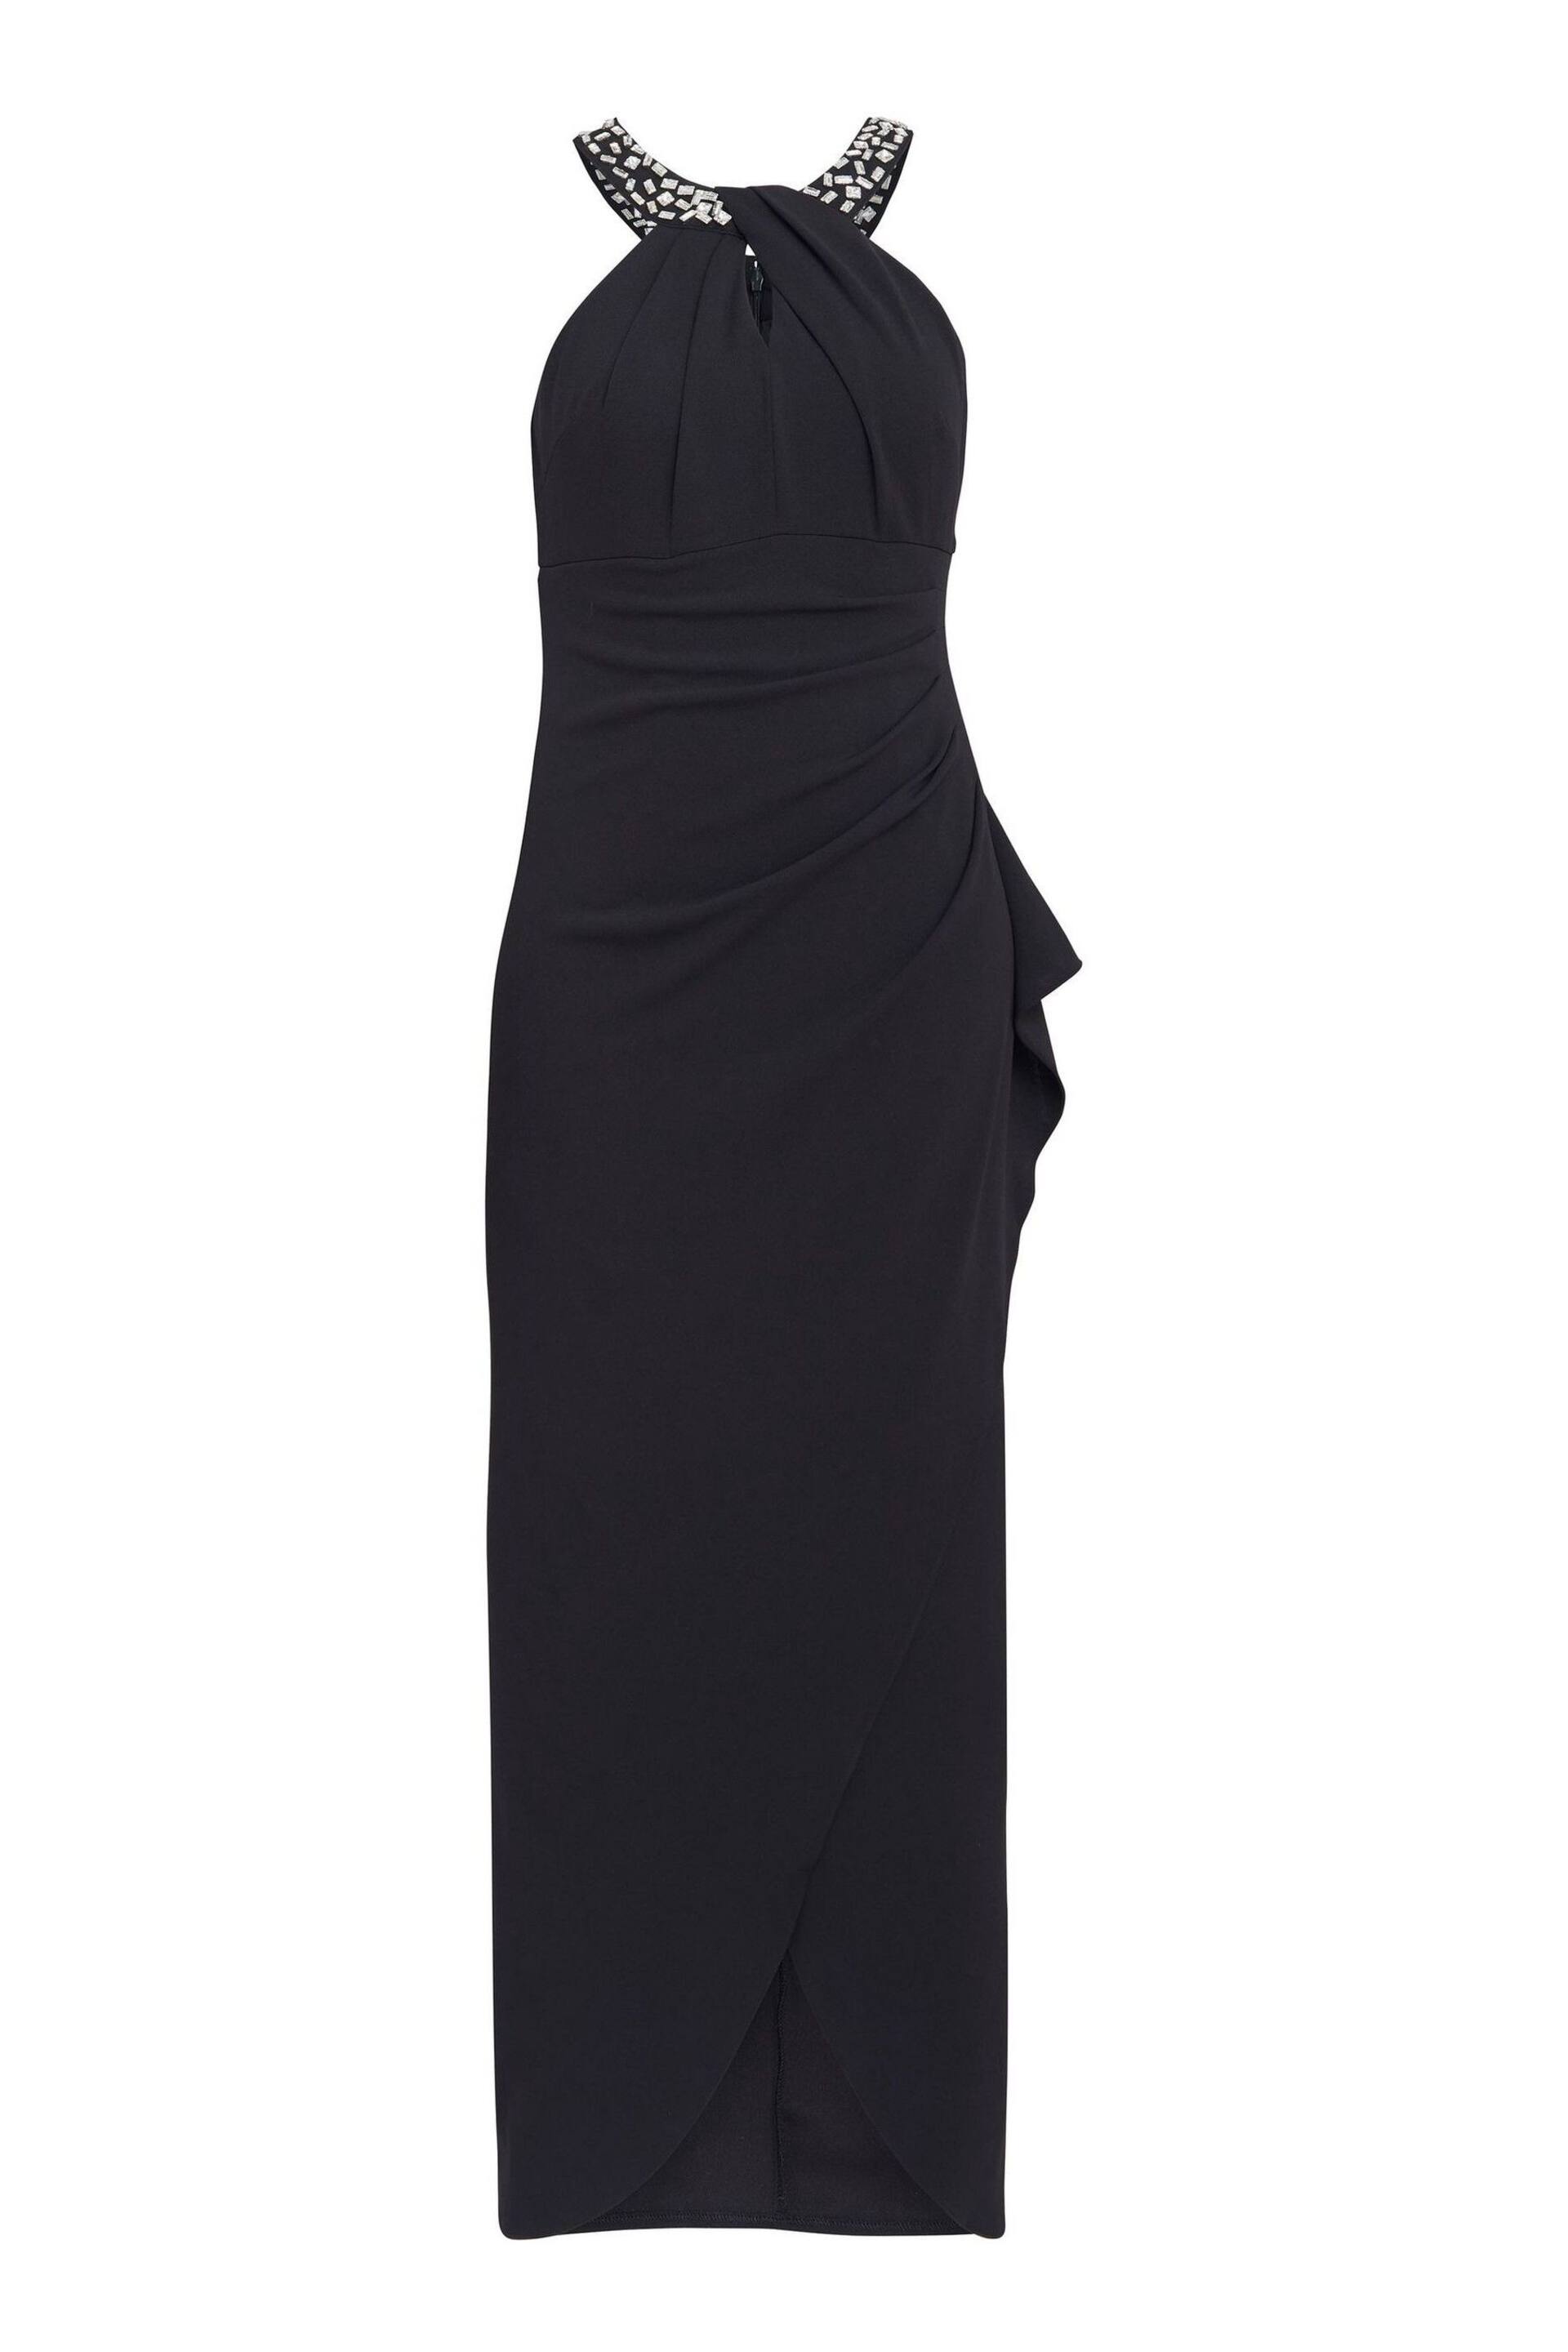 Gina Bacconi Kasandra Halter Beaded Neck Maxi Black Dress - Image 5 of 5